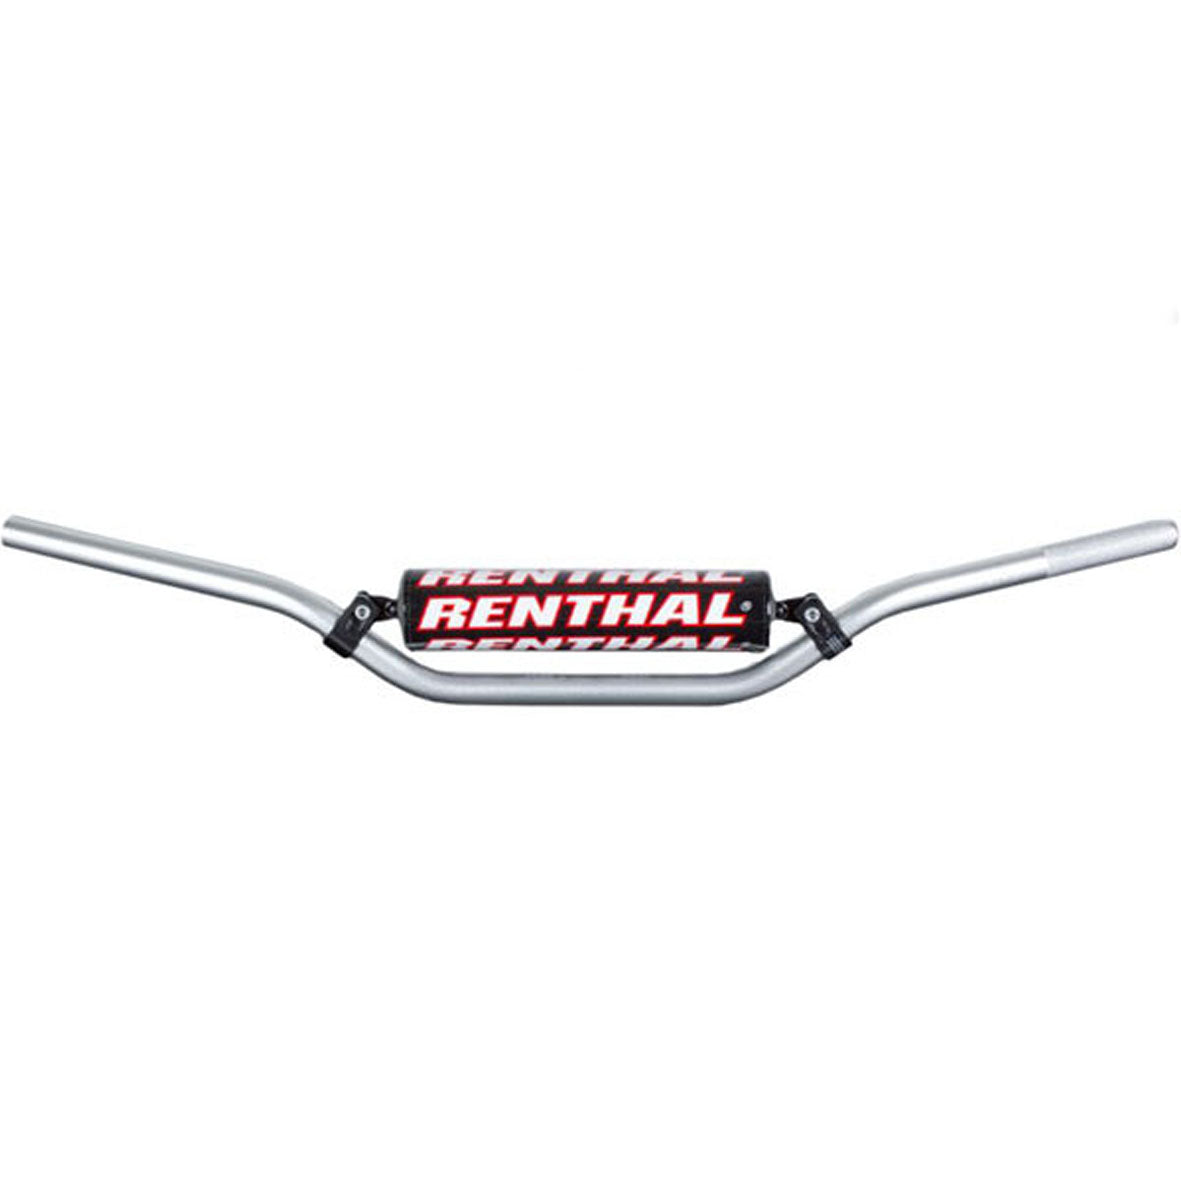 Renthal 7/8 Mini MX Kawa/KTM/Suz 65cc Handlebar (Silver)